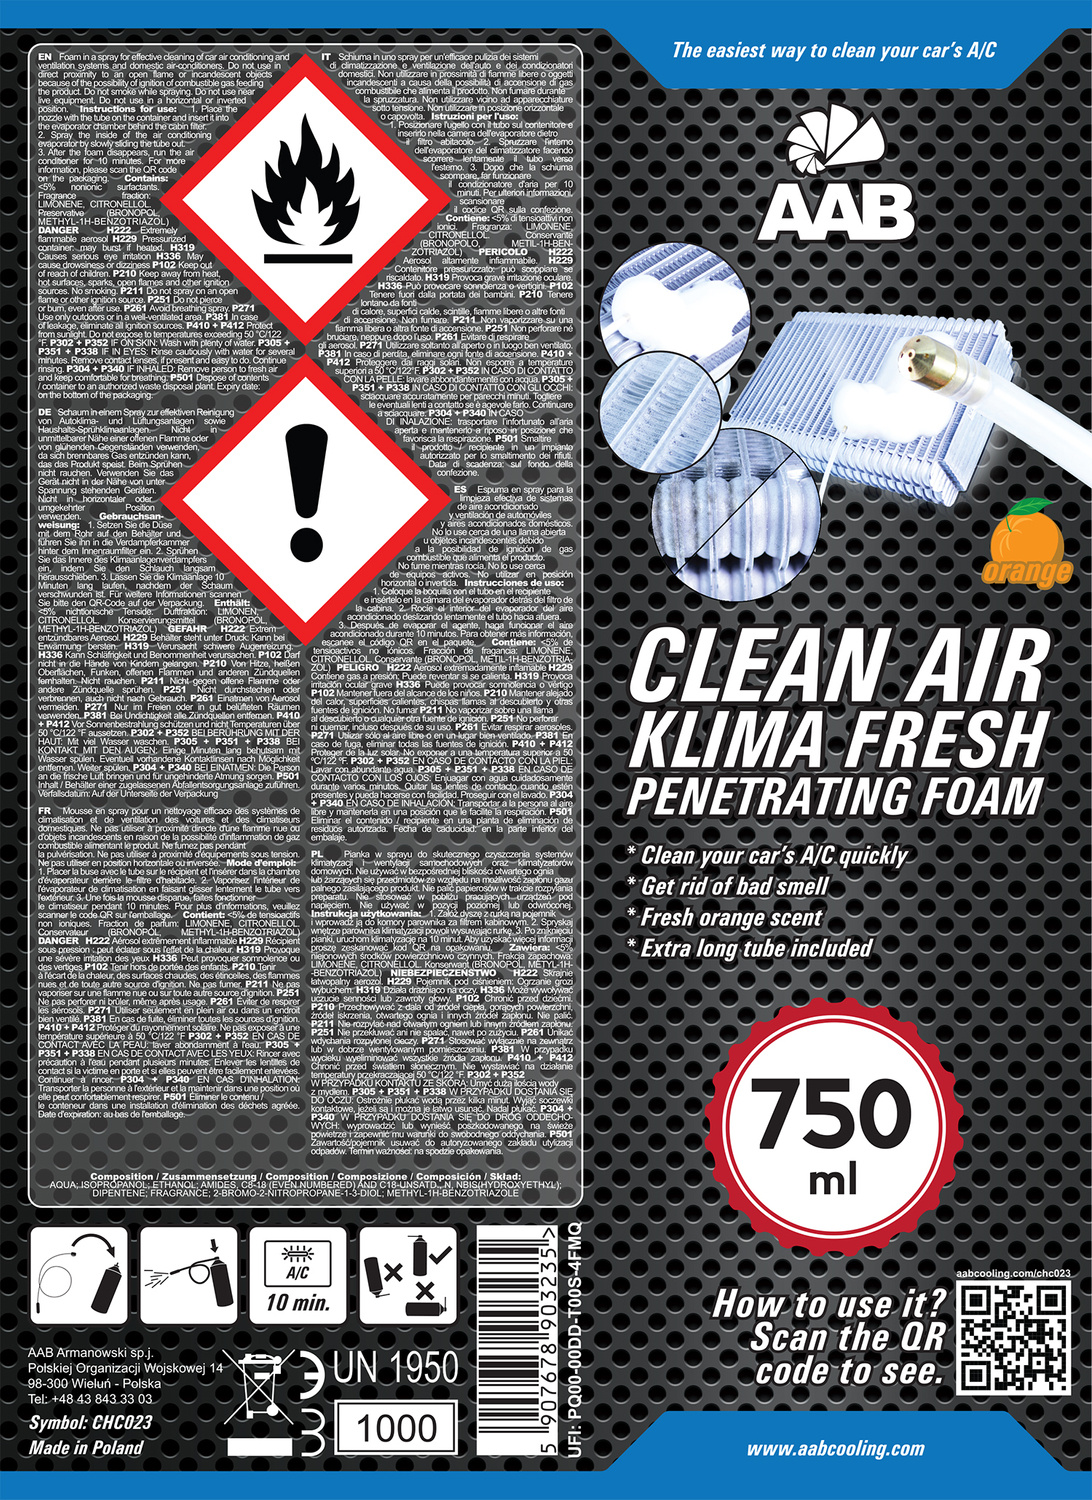 aab_clean_air_klima_fresh_penetrating_foam_750ml_dsc_6996